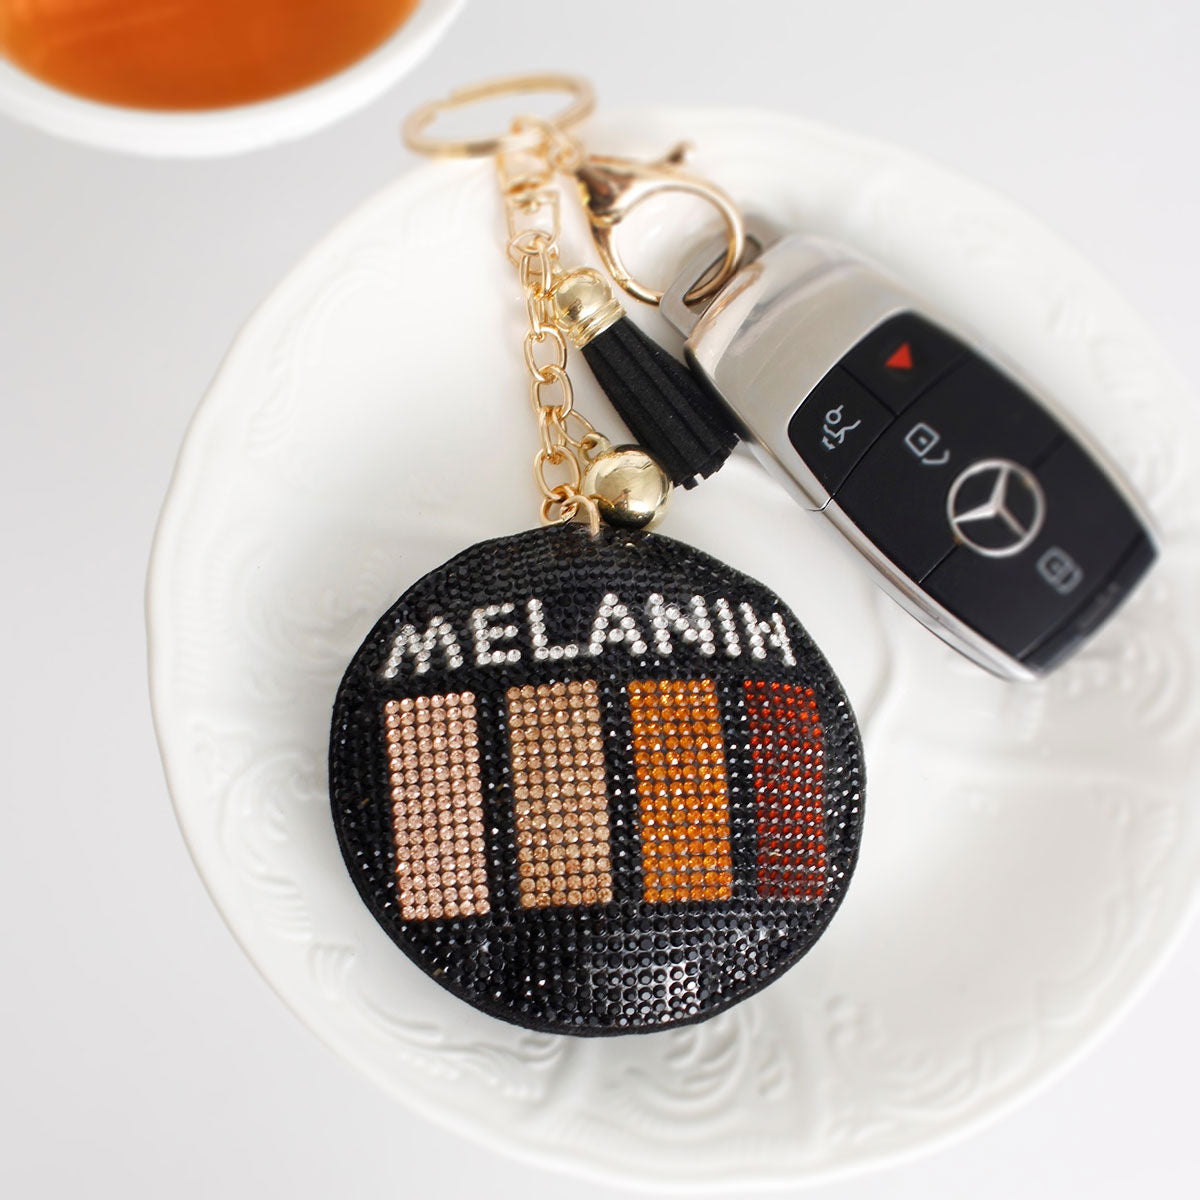 Black Melanin Round Keychain